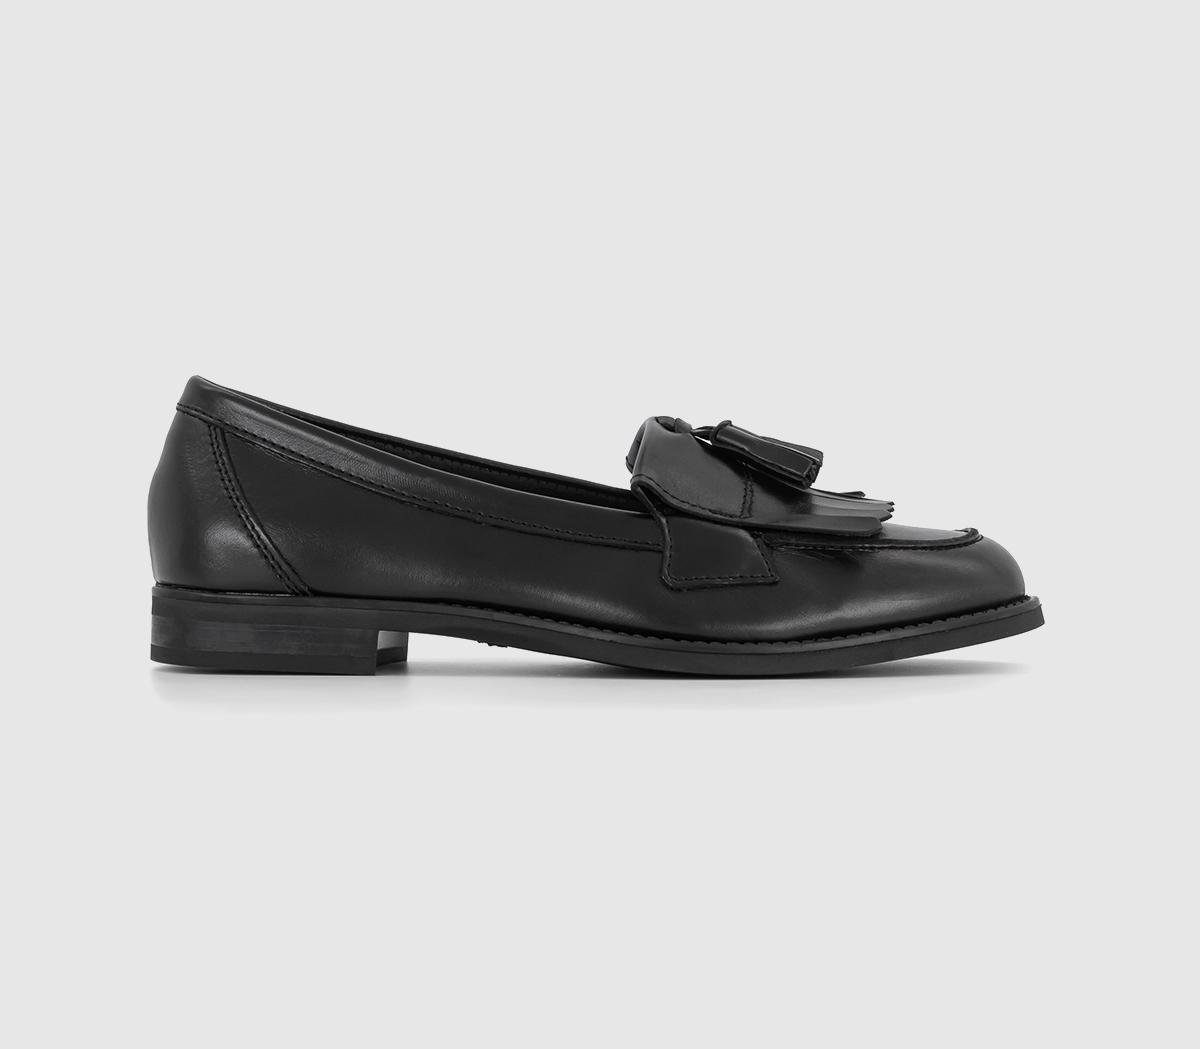 OFFICE Fitz Tassle Fringe Loafers Black Leather - Flat Shoes for Women